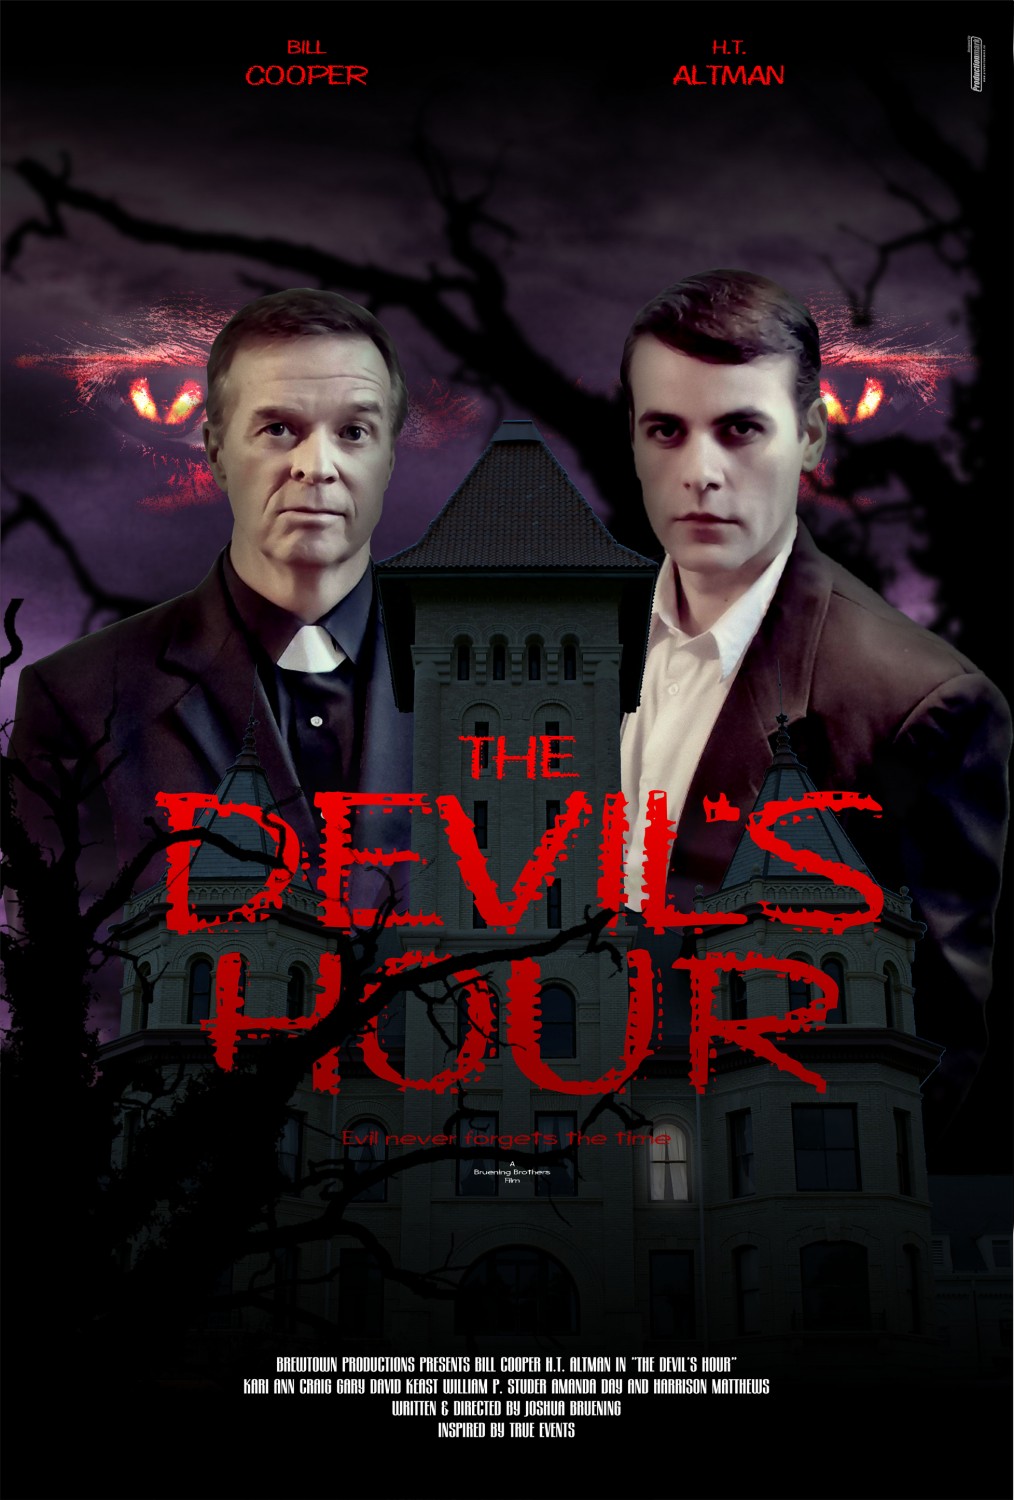 Productionmark-Services-Film-Poster-Design-Feature-Film-The-Devil-Hour